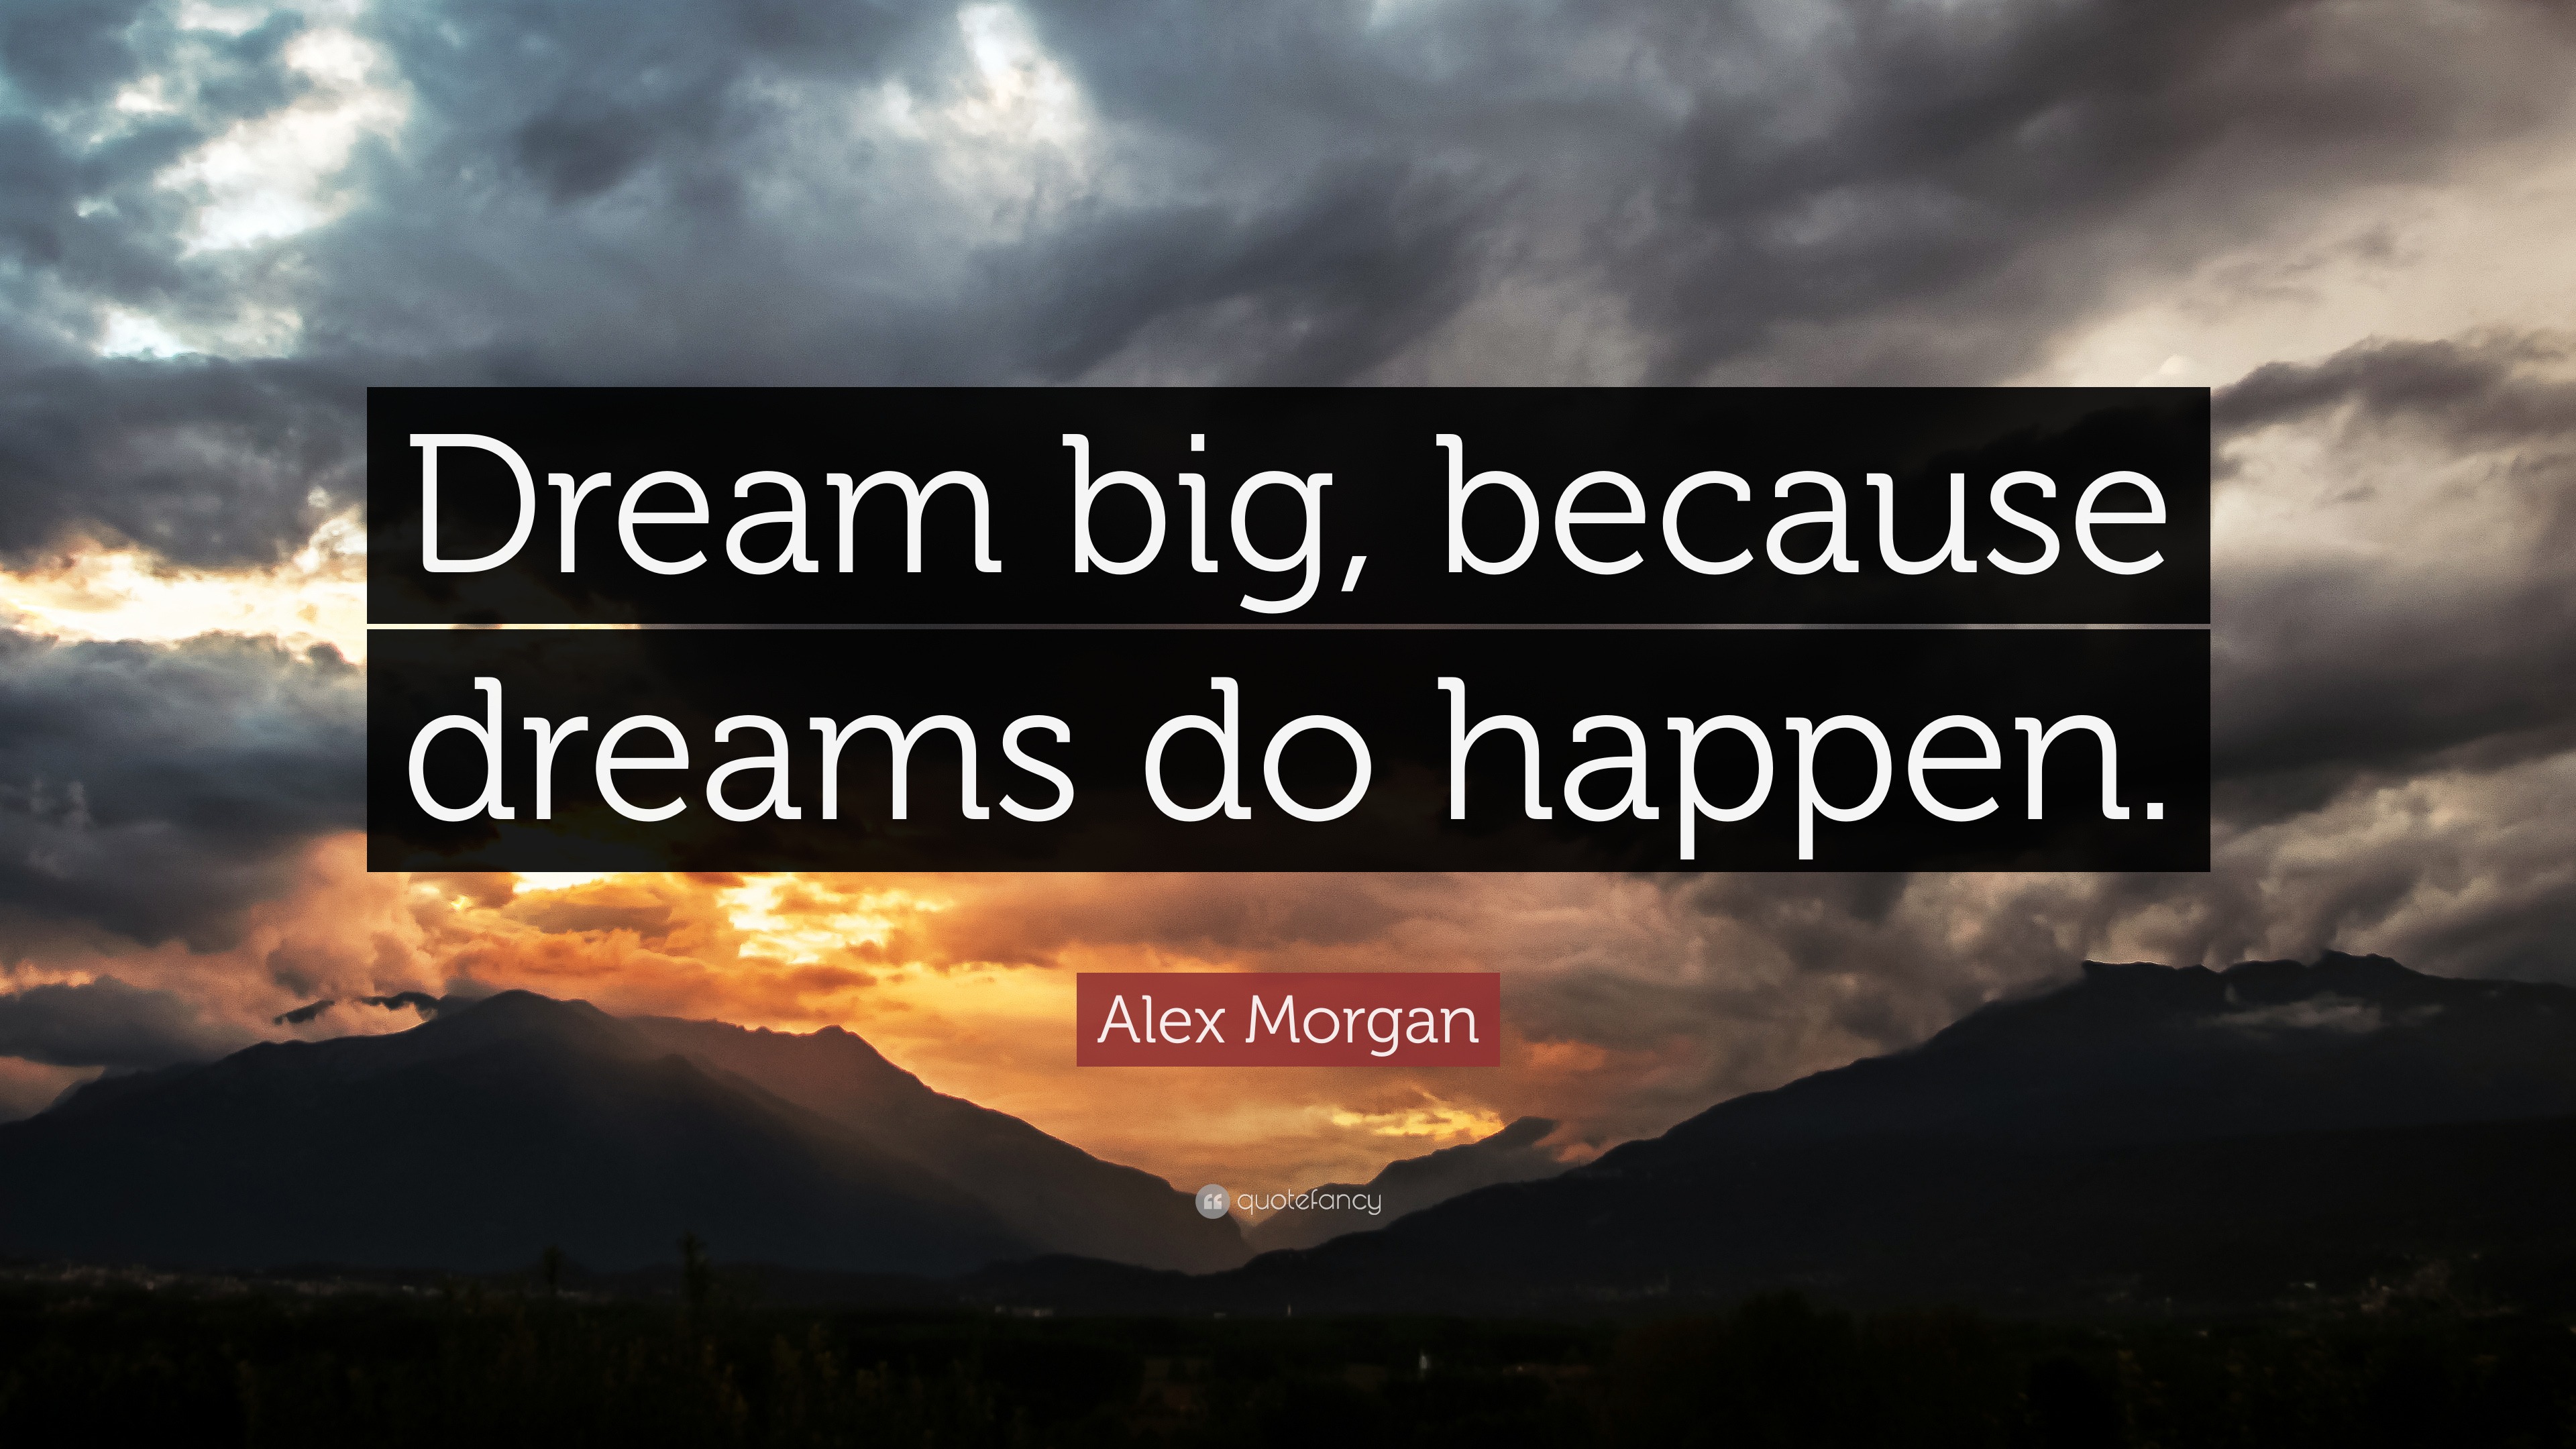 Alex Morgan Quote: “Dream big, because dreams do happen.” (22